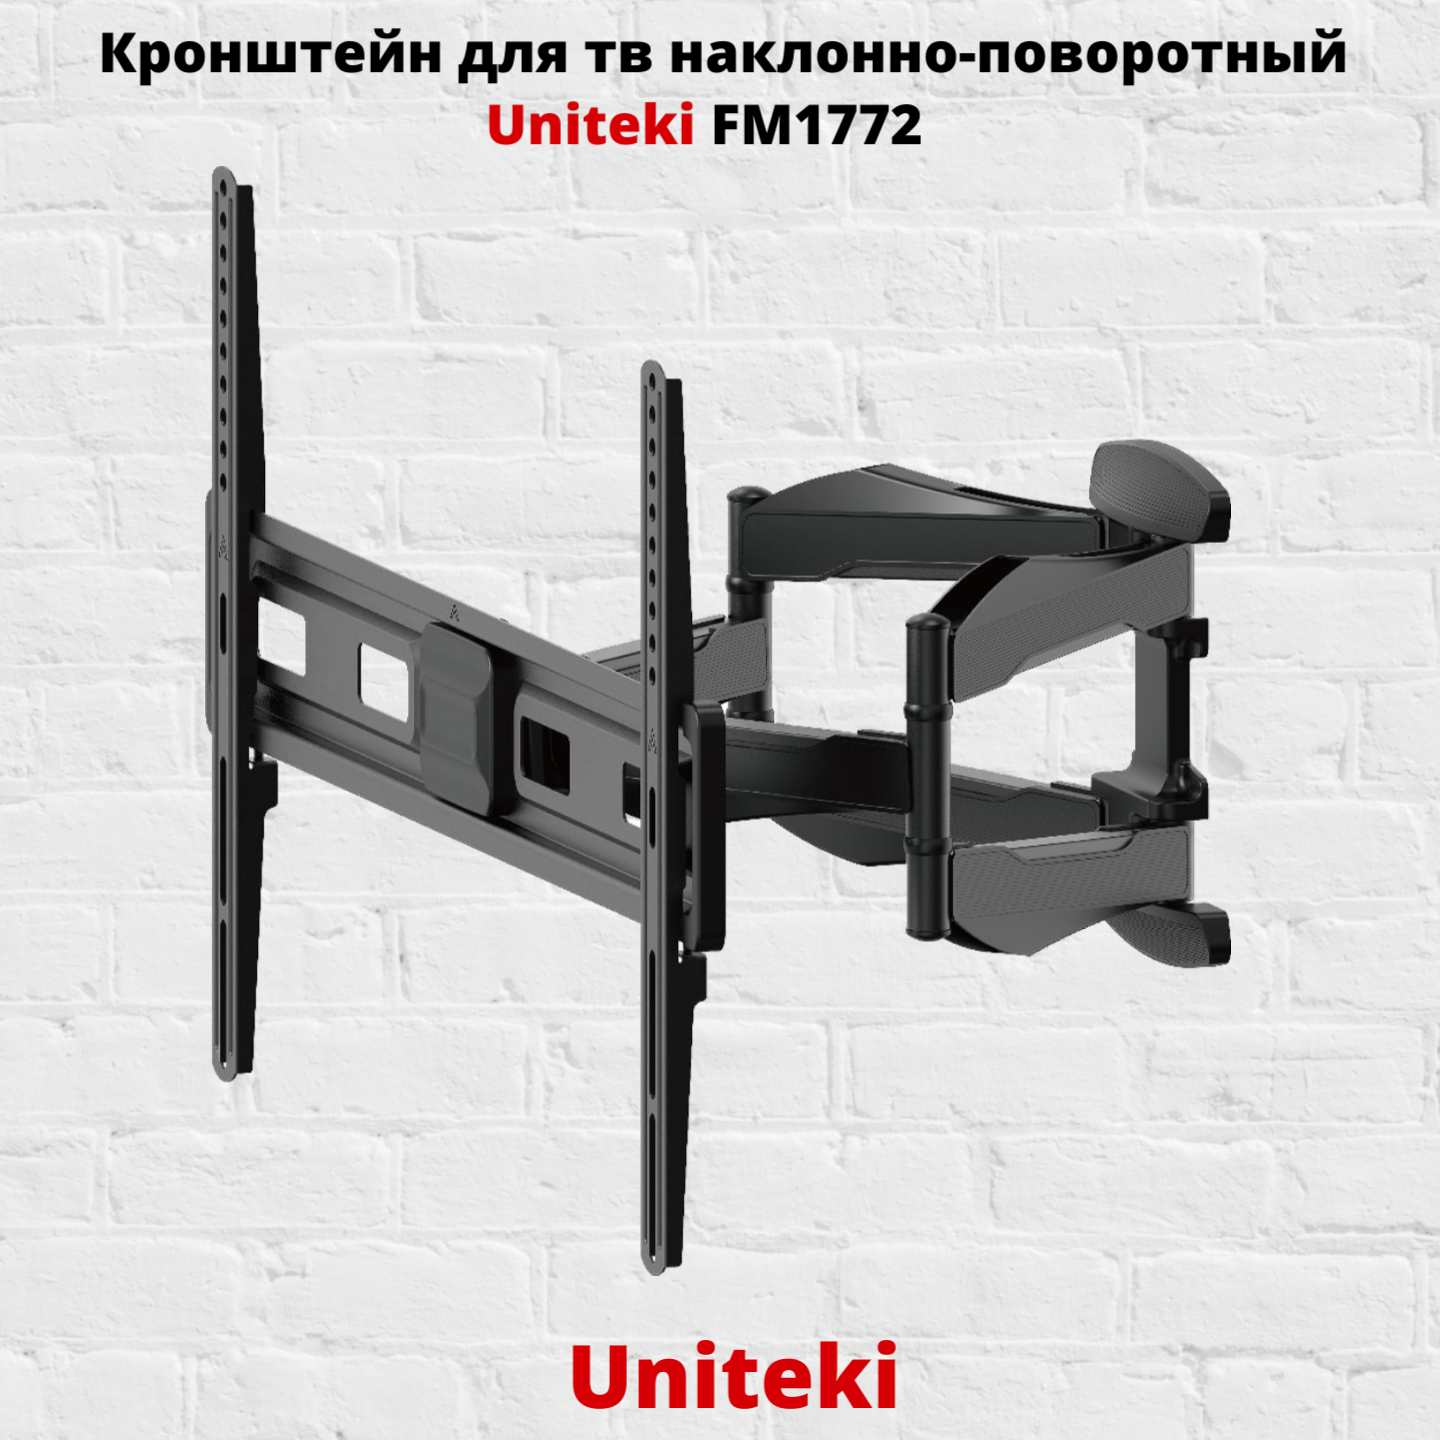 Наклонно-поворотный кронштейн для телевизора Uniteki FM1772 37-80 черный